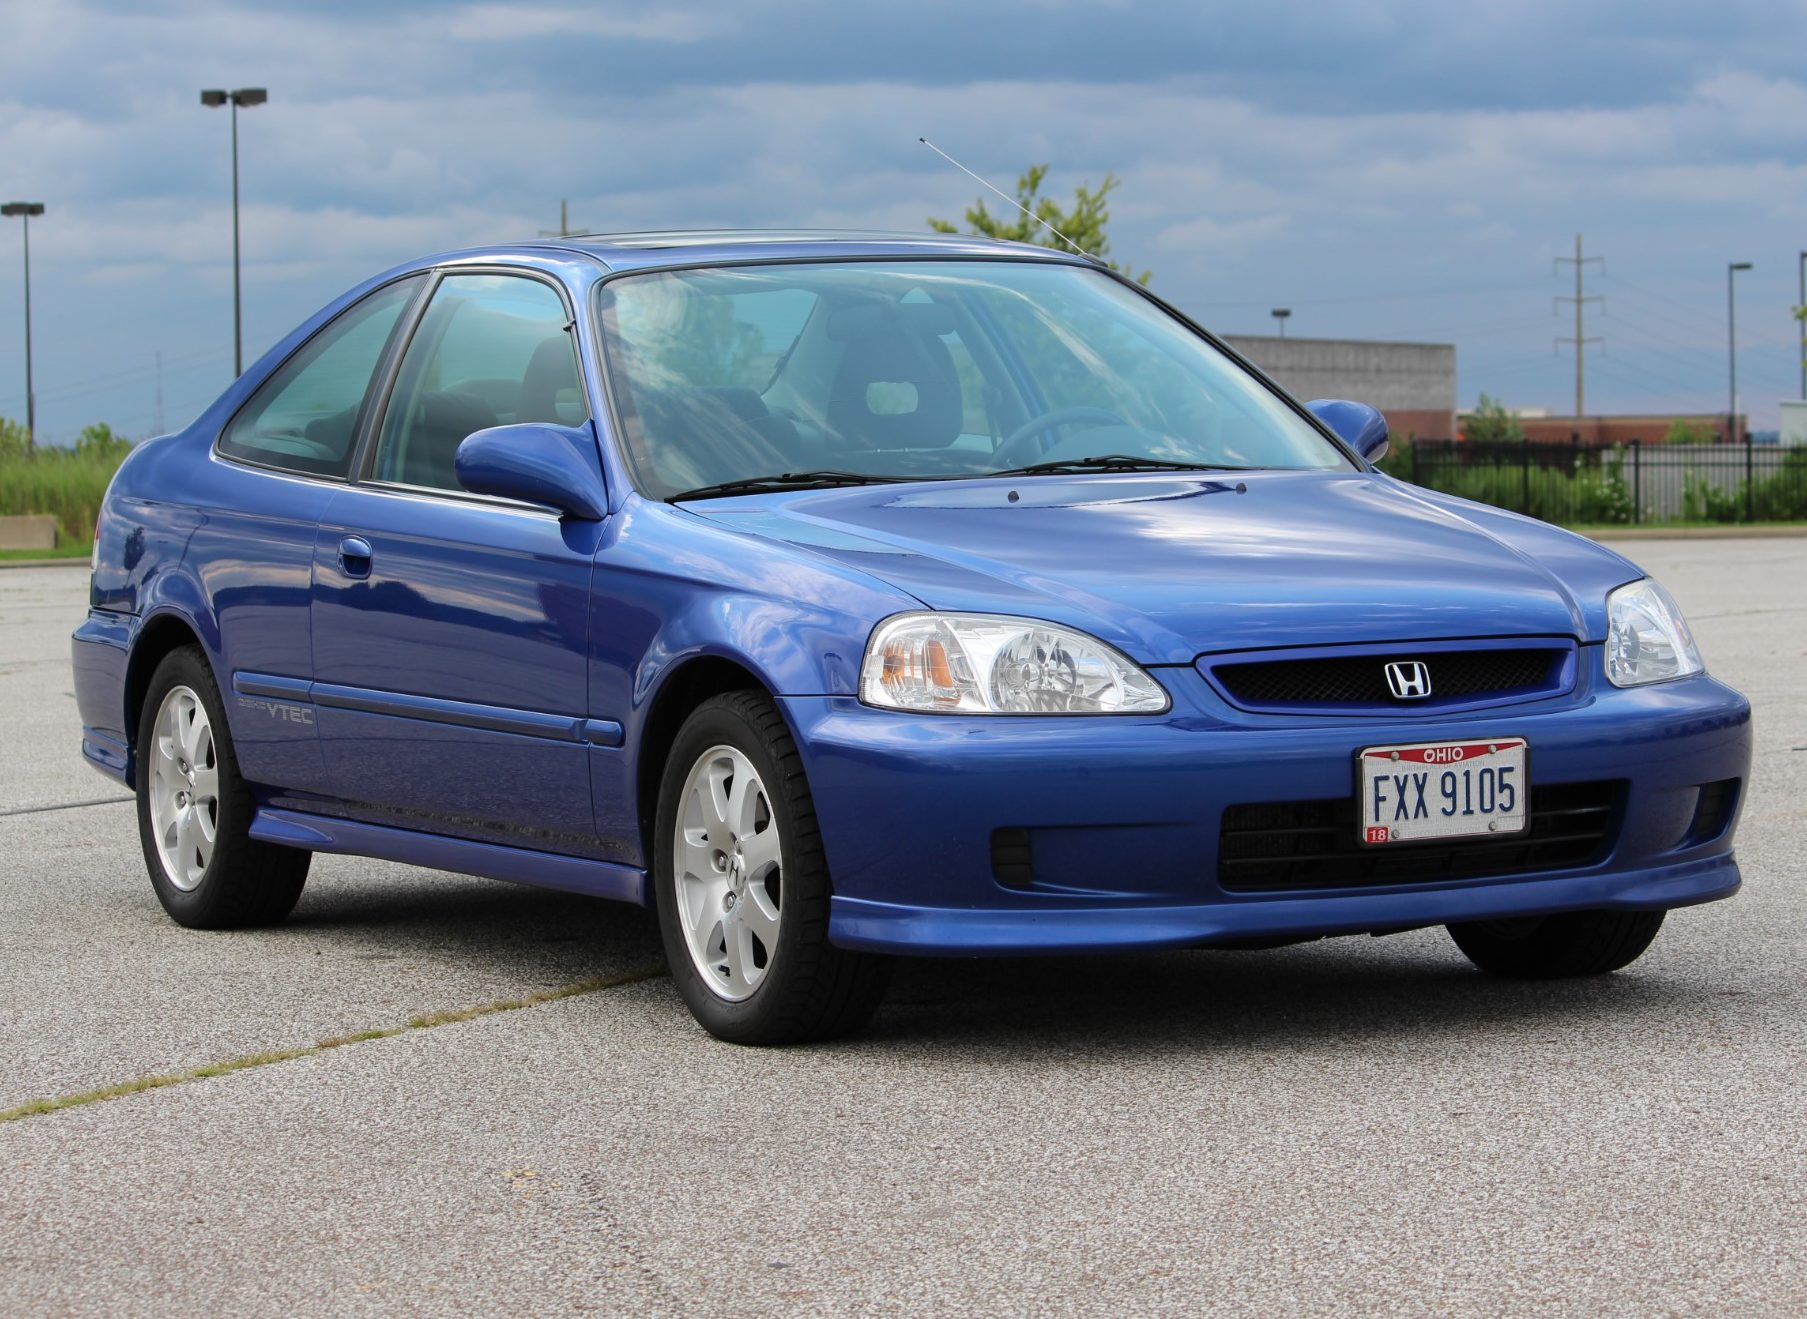 Honda civic 1999. Хонда Цивик седан 1999. Honda Civic 1999 седан. Honda Civic si 1999.